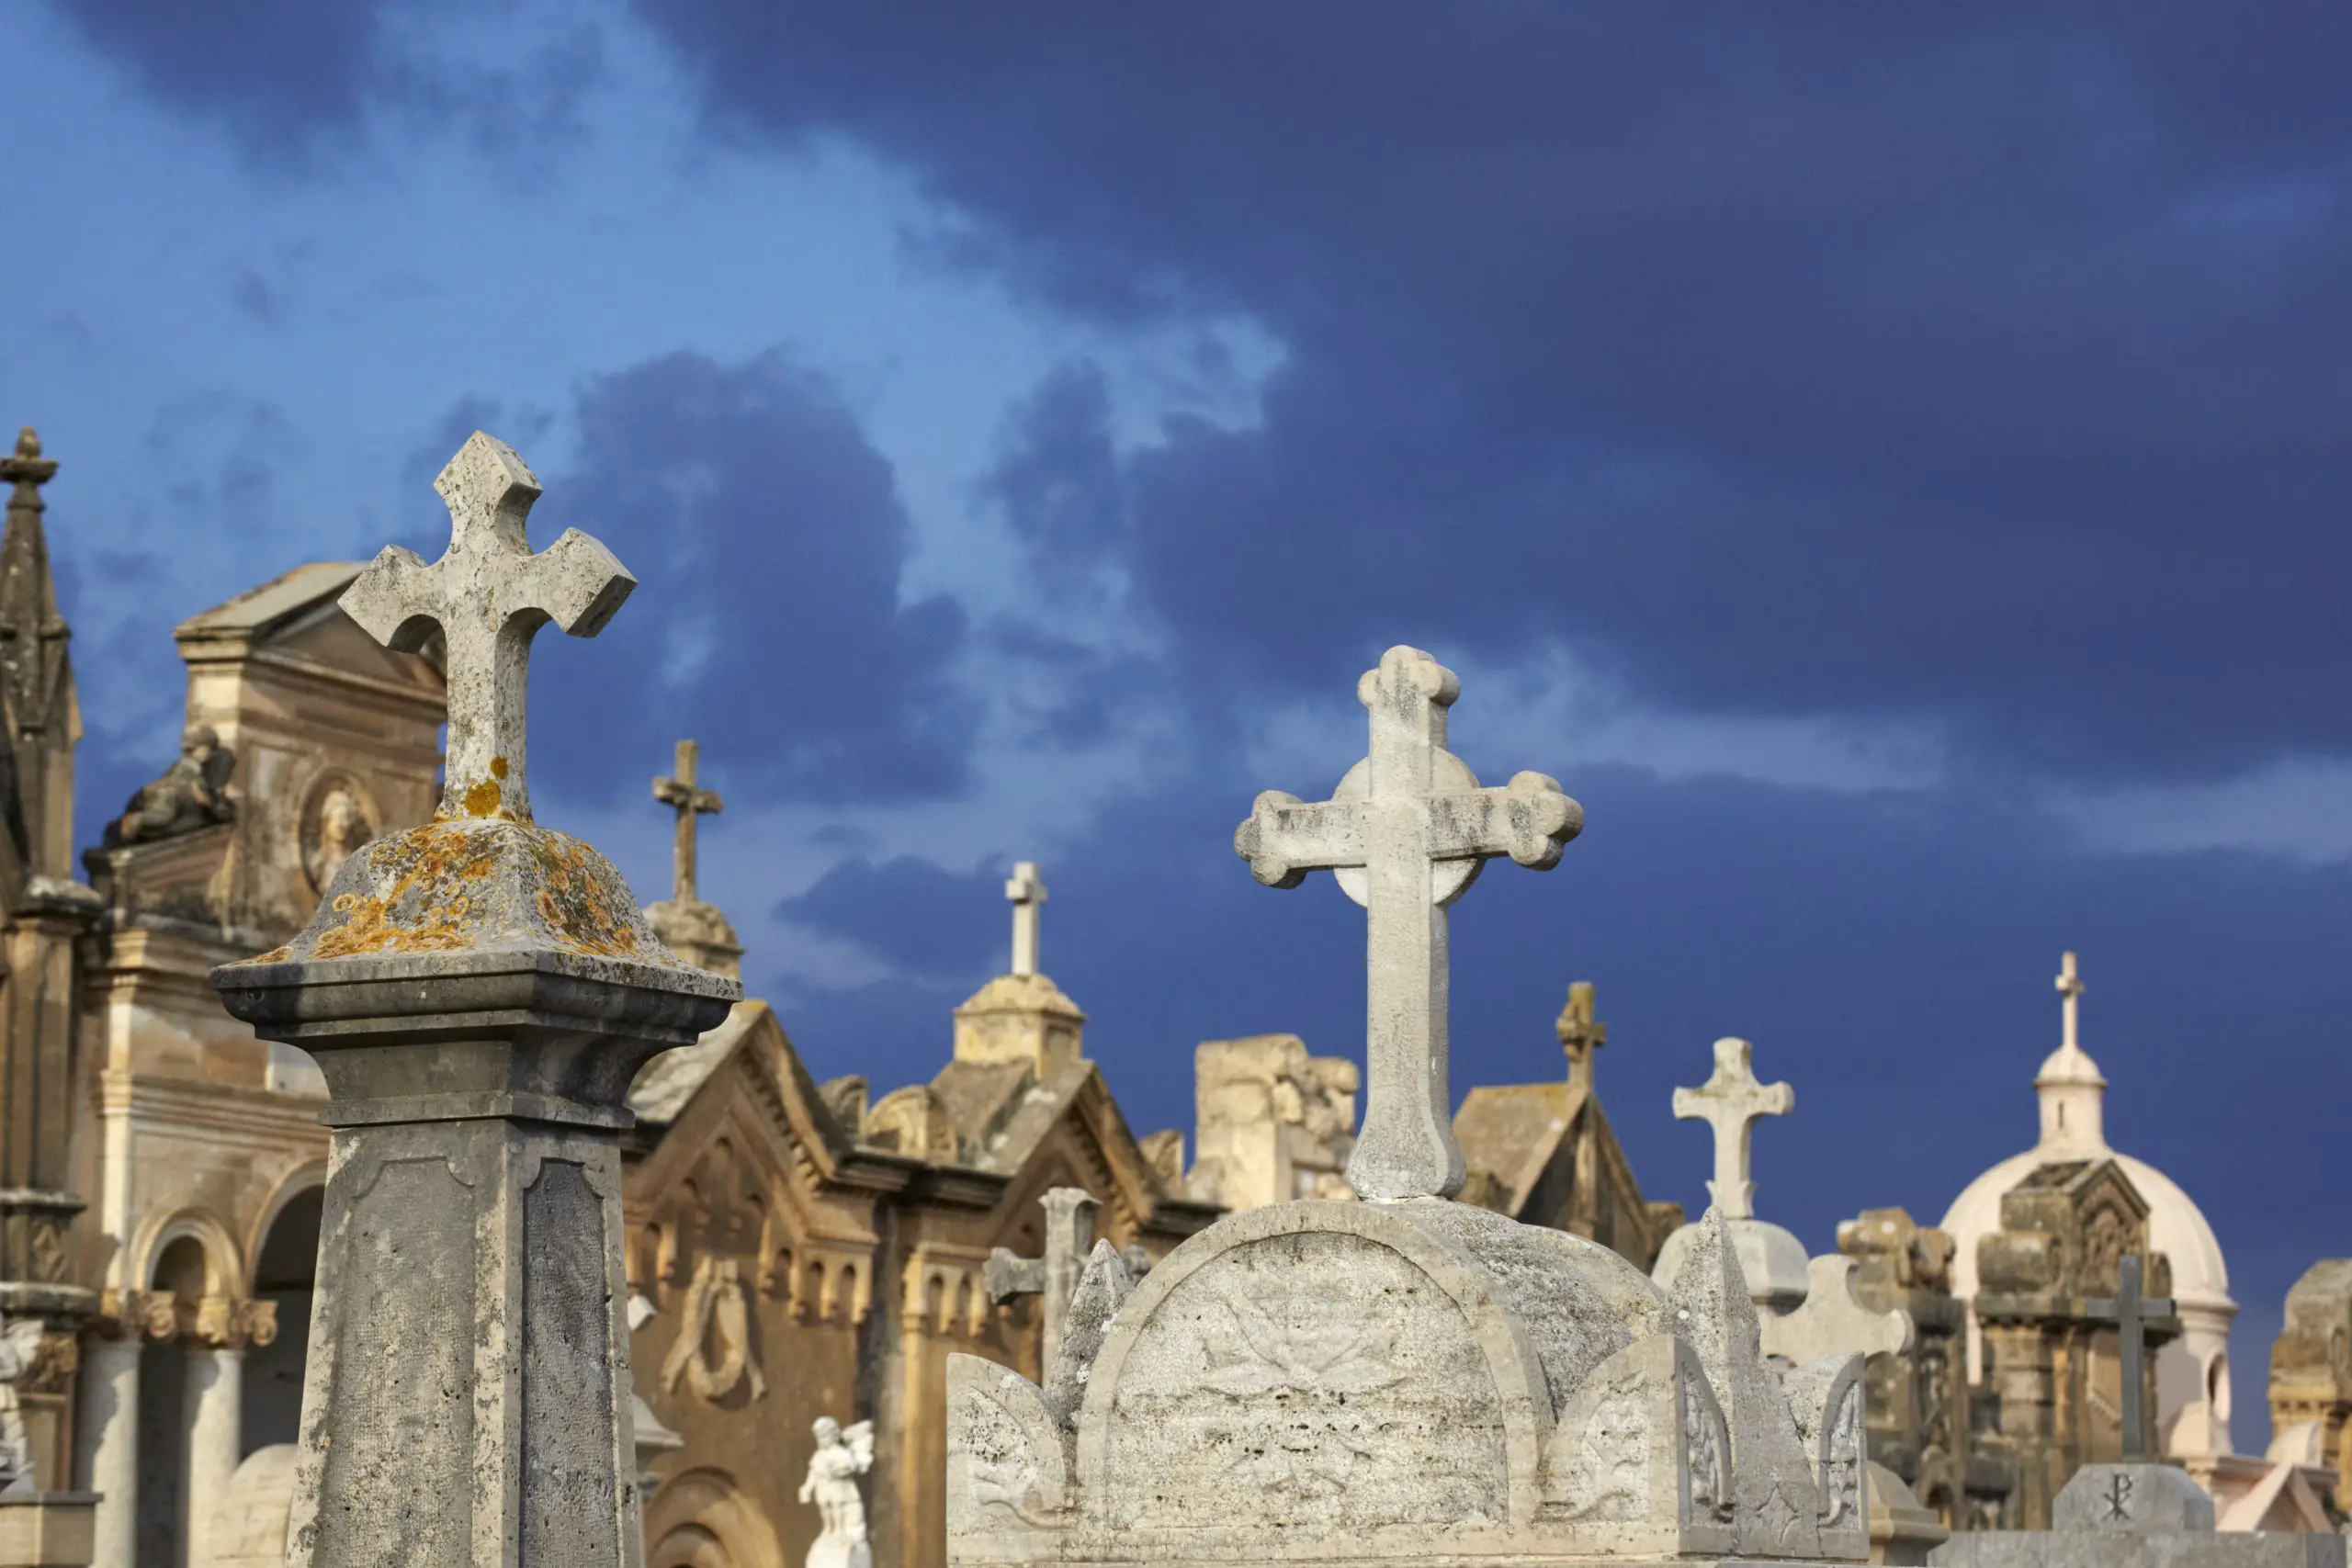 Italy, Sicily, Alcamo, gravestones against moody sky